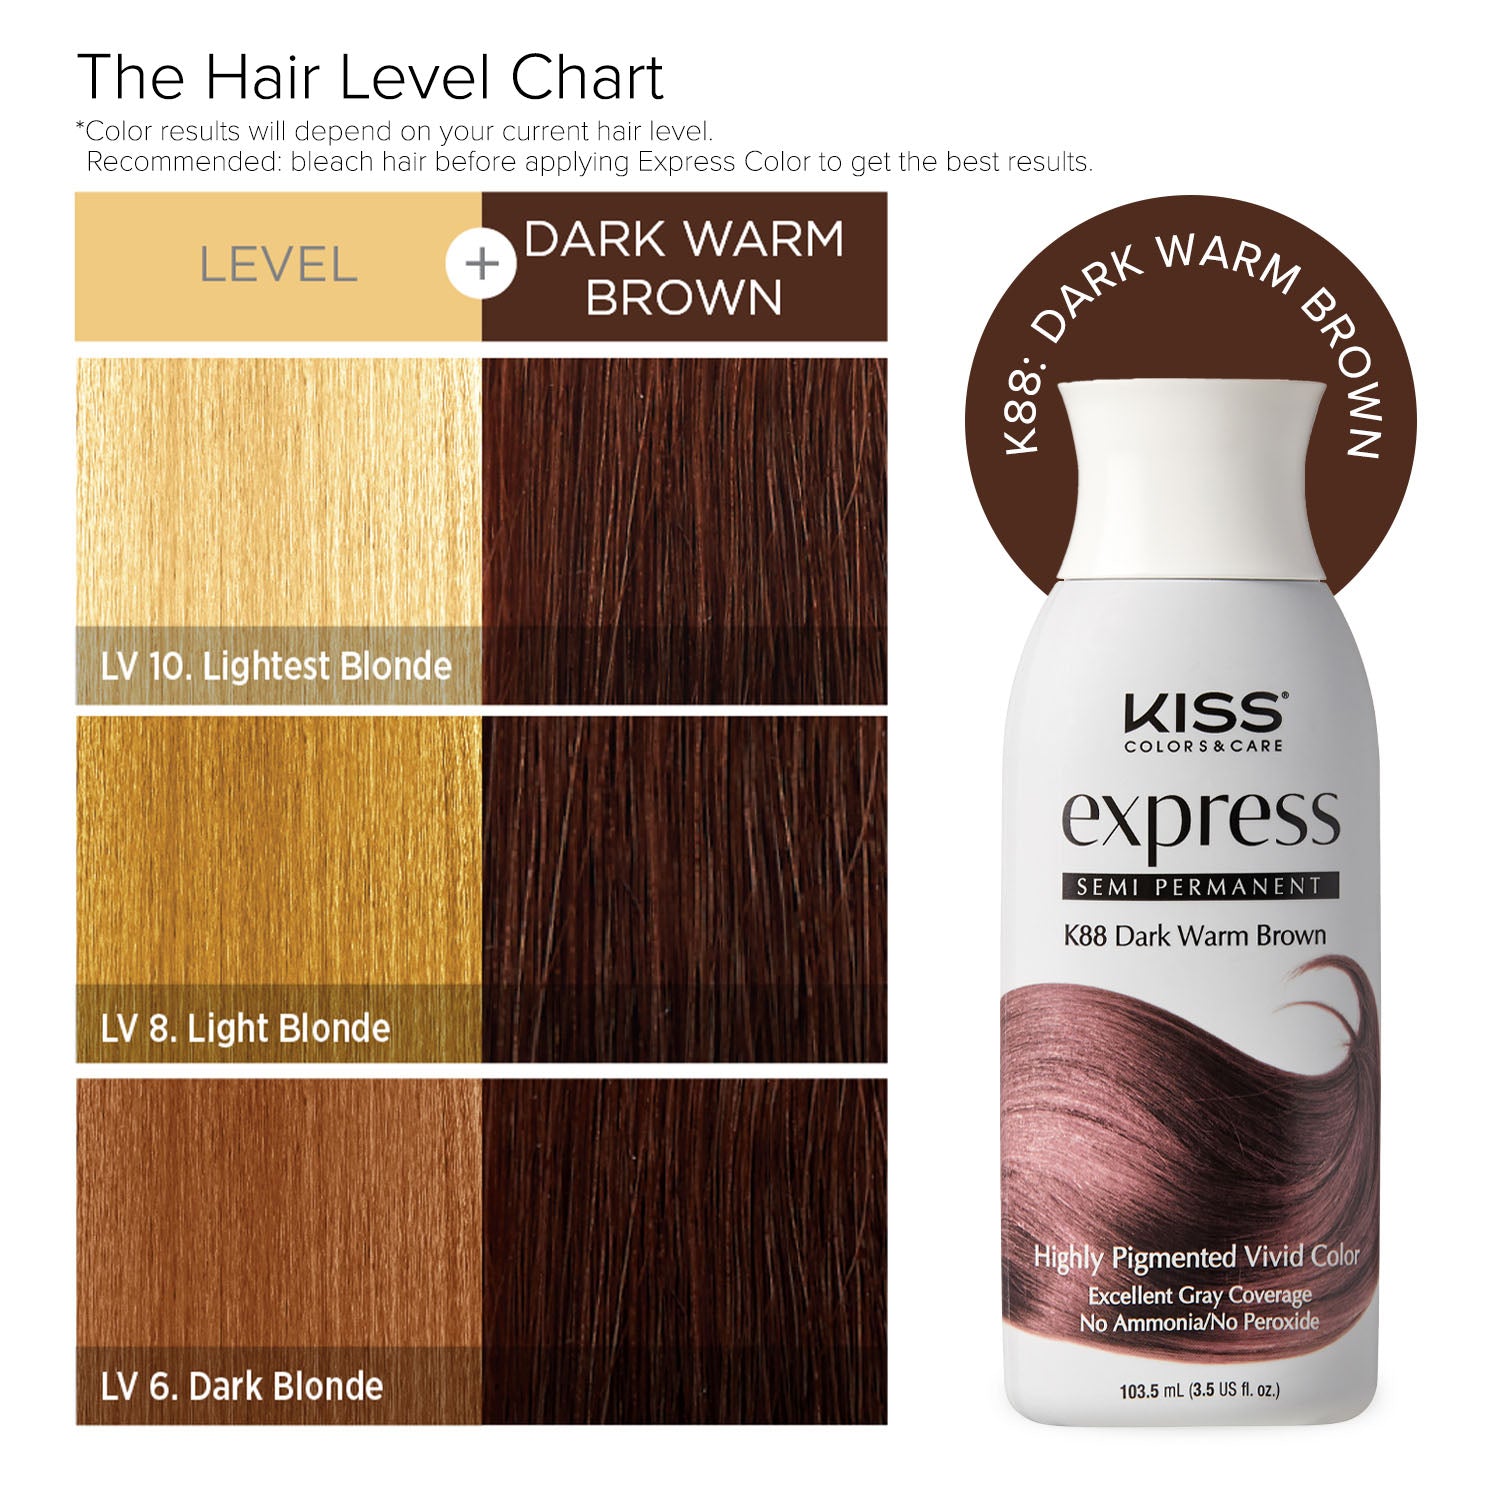 Kiss Express Semi-Permanent Hair Color - Dark Warm Brown, 3.5 Oz (K88)